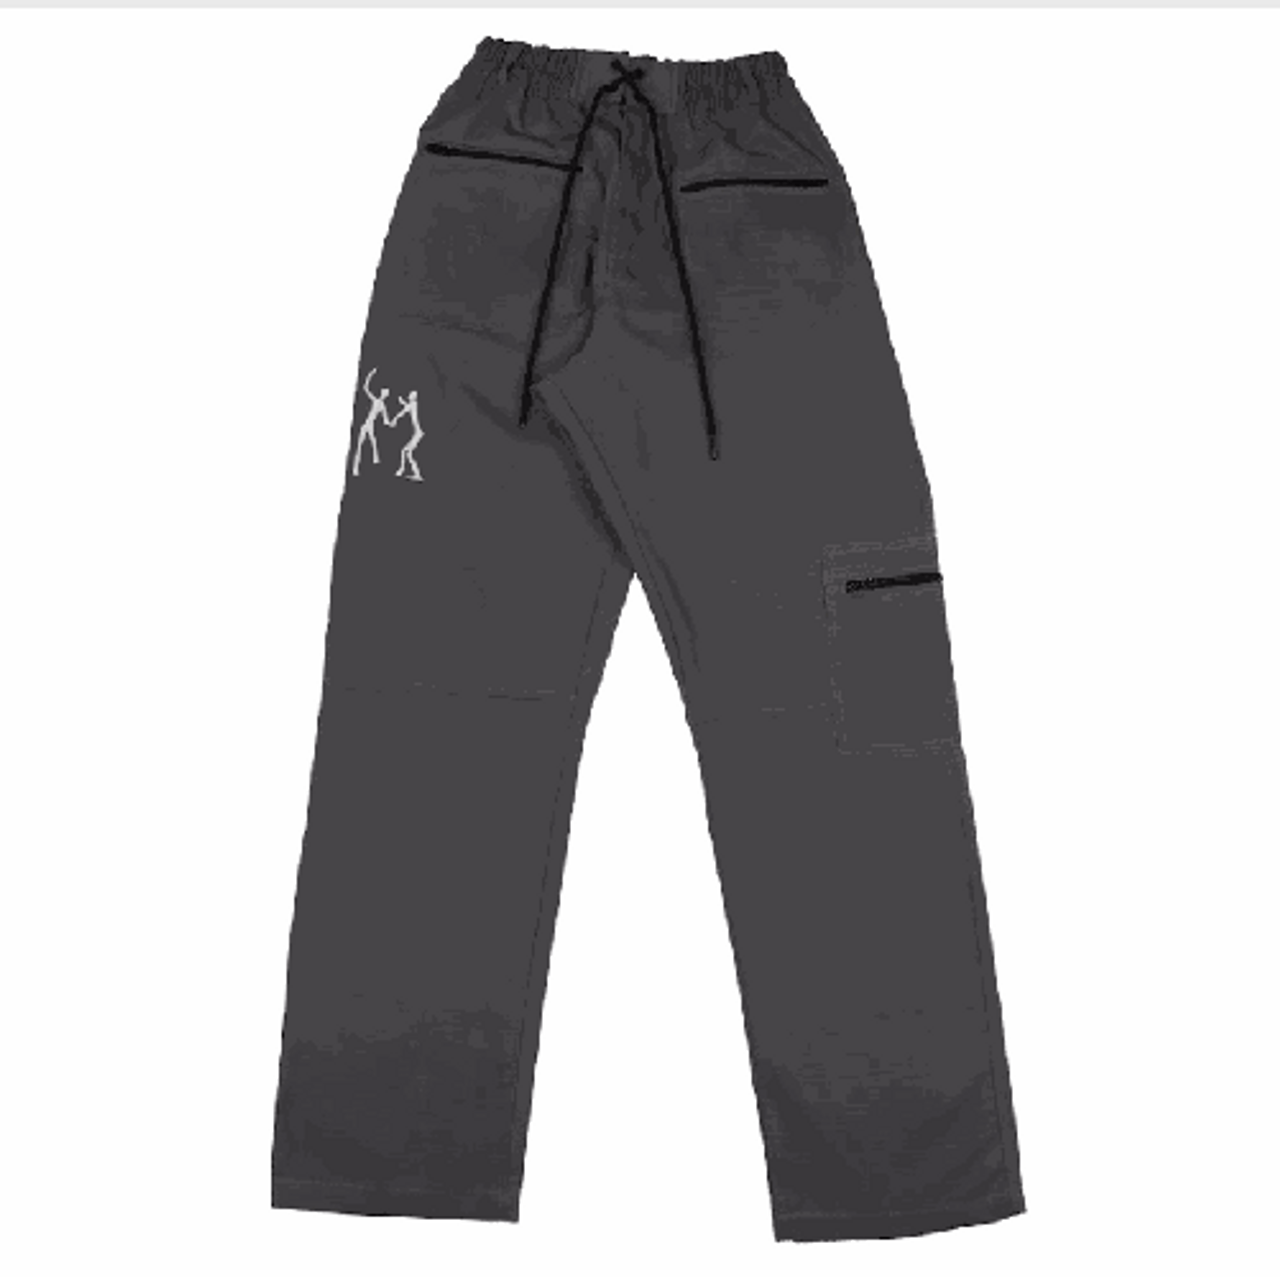 Daygo Grey Ripstop Cargo Pants XL